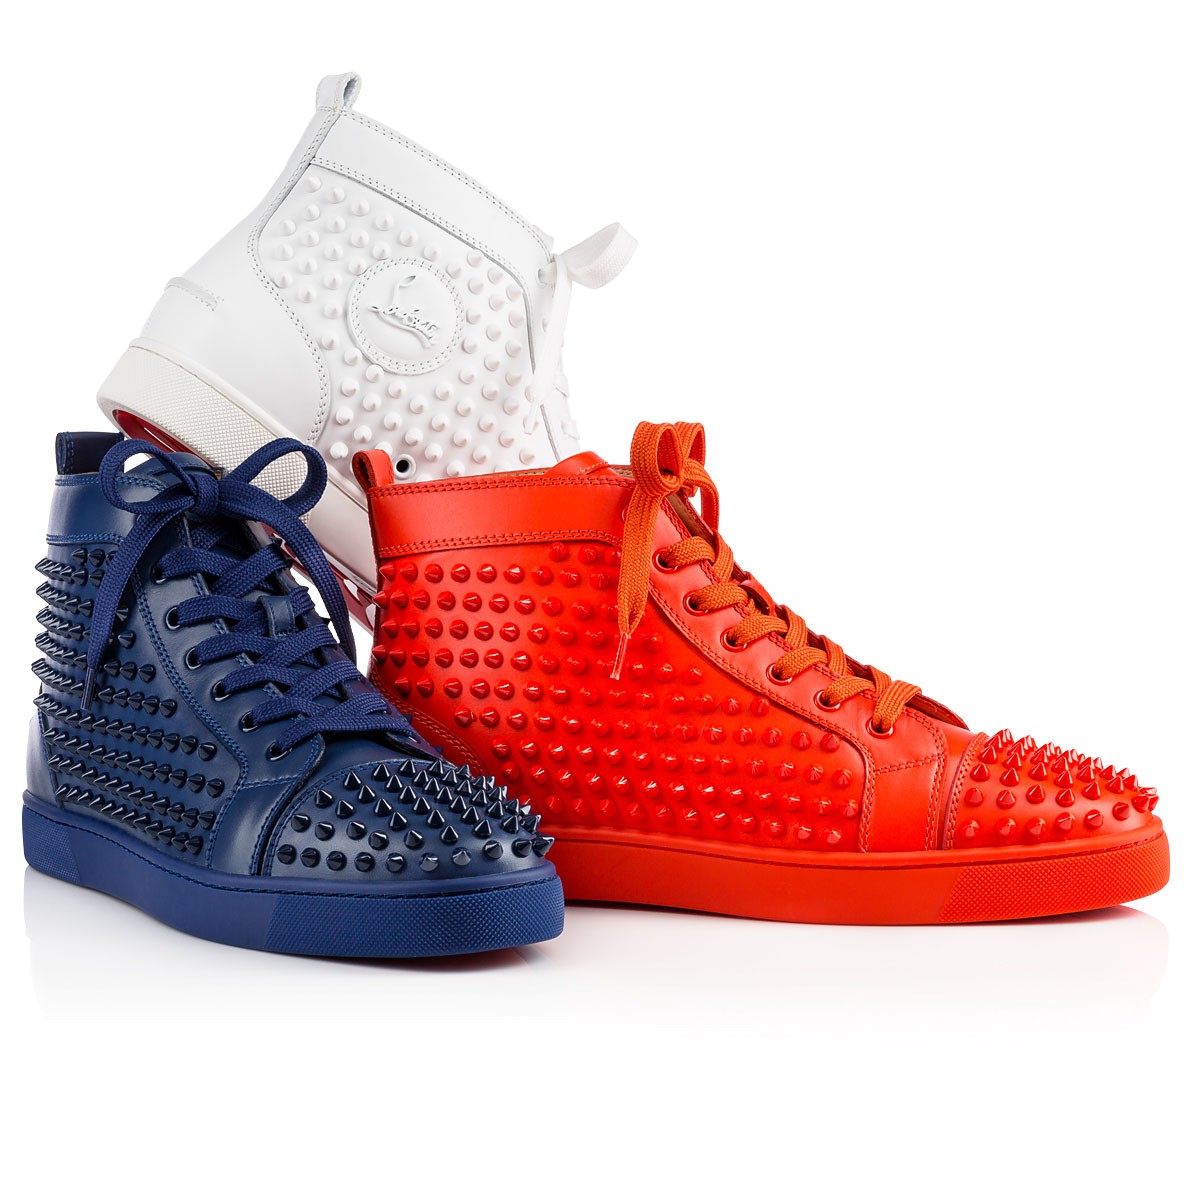 Louis Vuitton Spikes Fashion Sneakers for Men